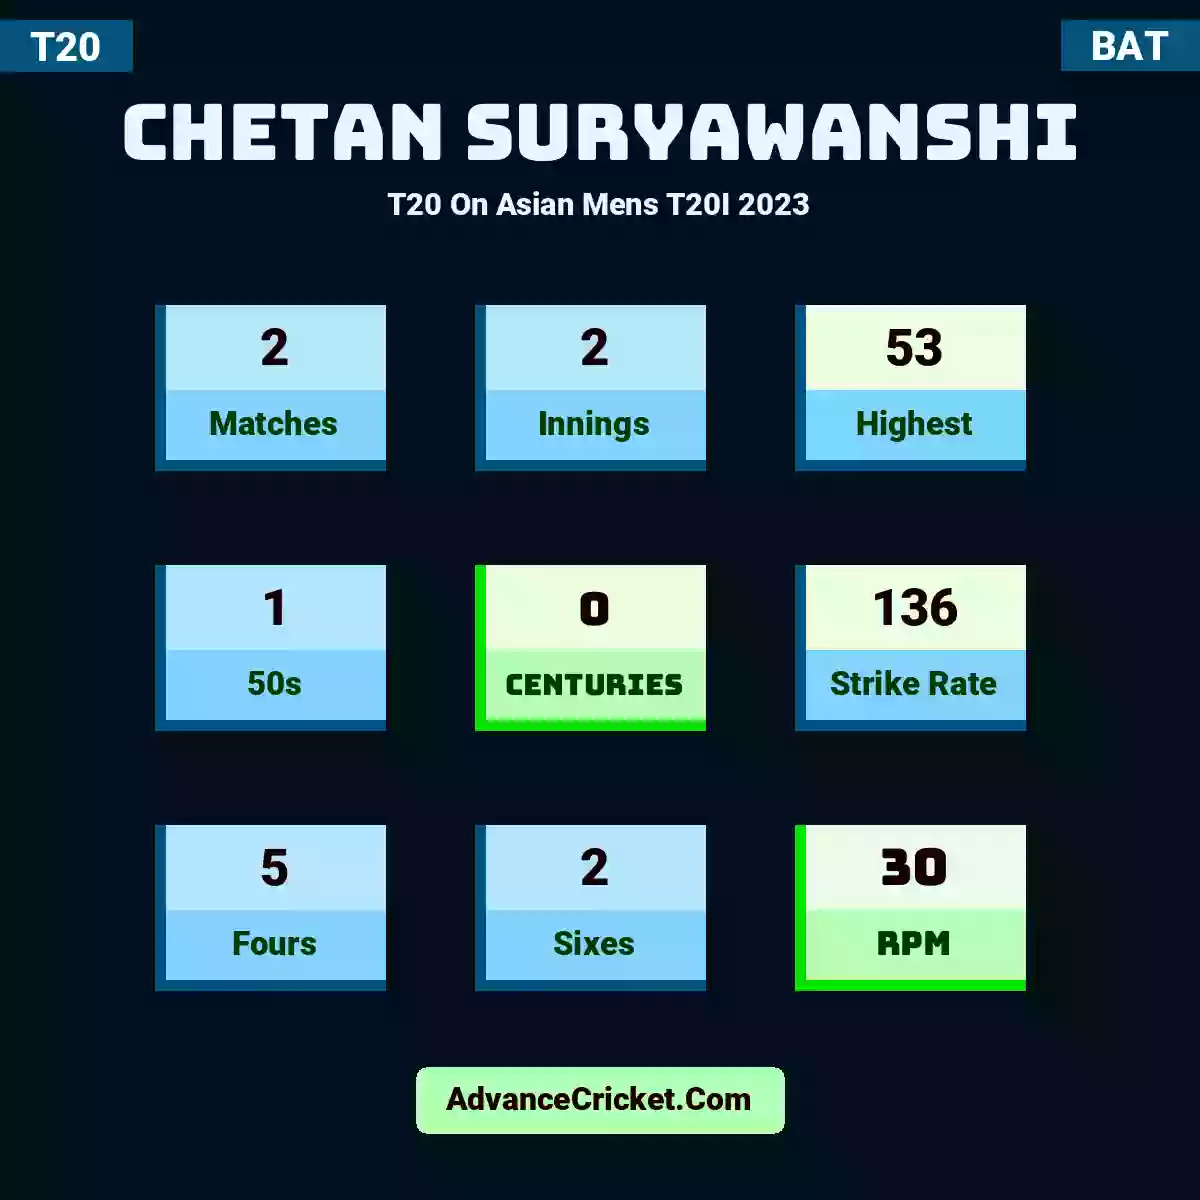 Chetan Suryawanshi T20  On Asian Mens T20I 2023, Chetan Suryawanshi played 2 matches, scored 53 runs as highest, 1 half-centuries, and 0 centuries, with a strike rate of 136. C.Suryawanshi hit 5 fours and 2 sixes, with an RPM of 30.